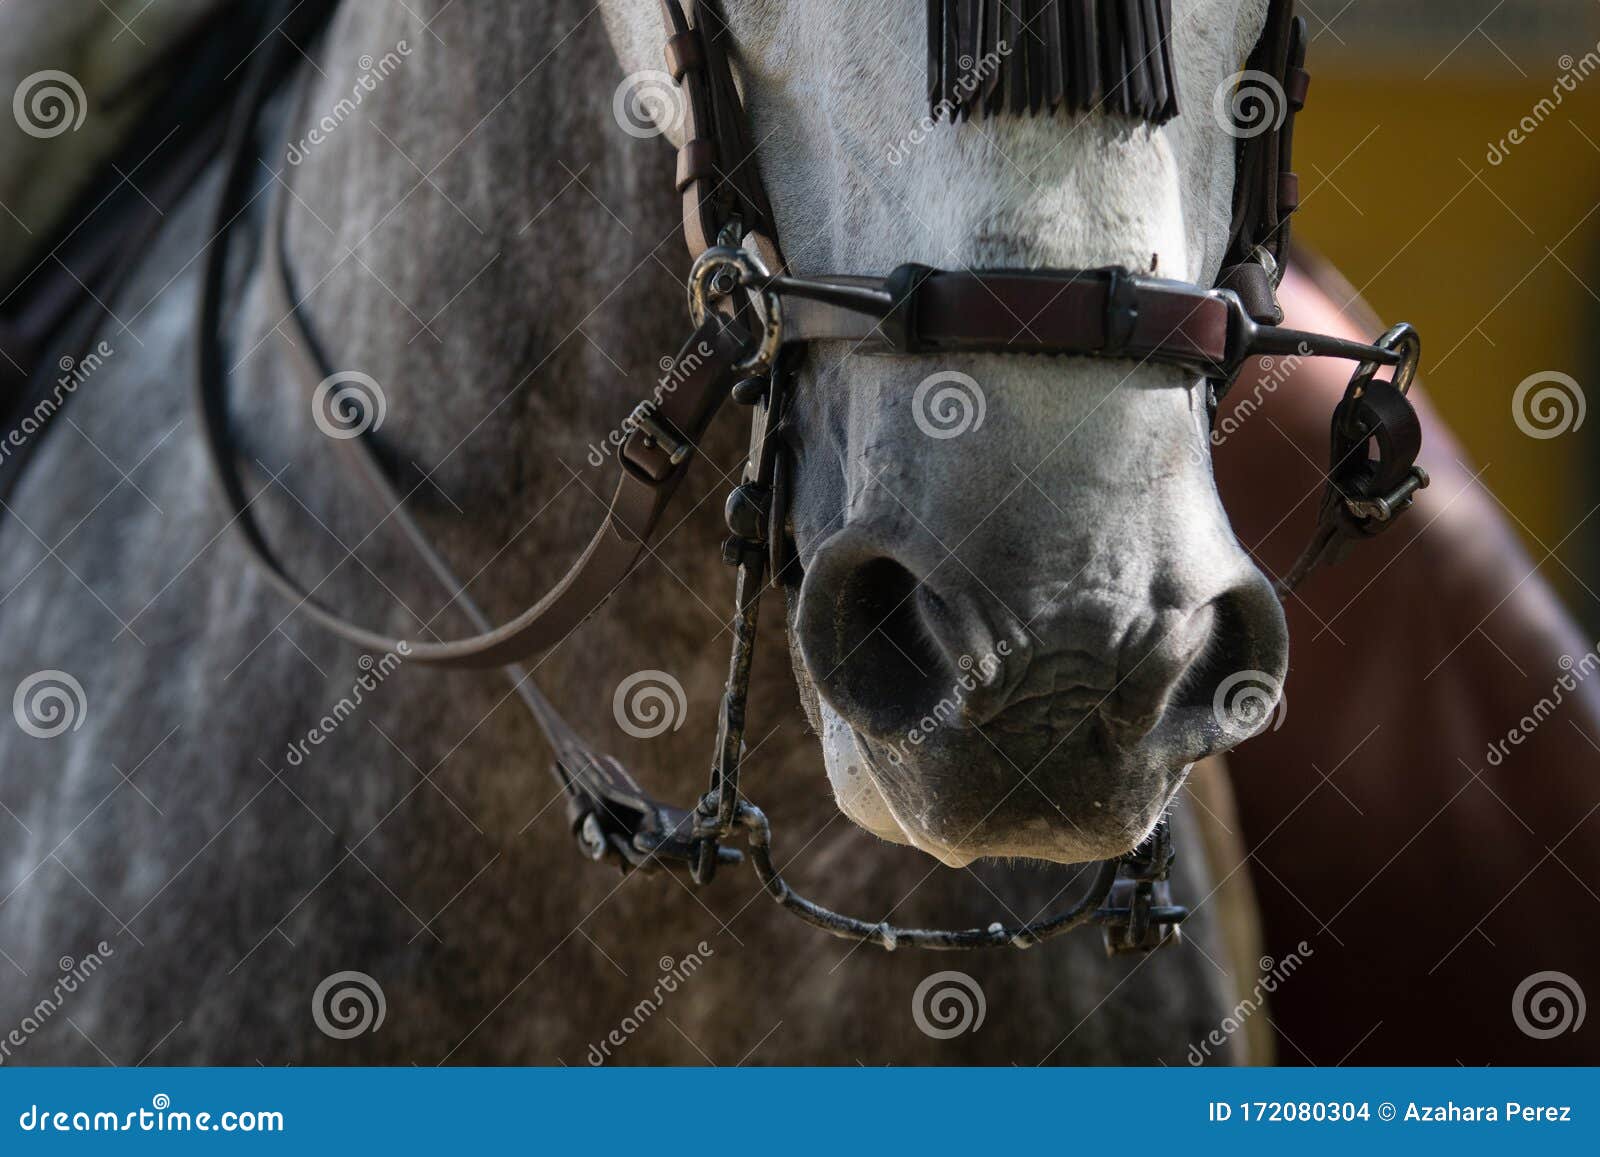 snout of a spanish horse with serreta noseband